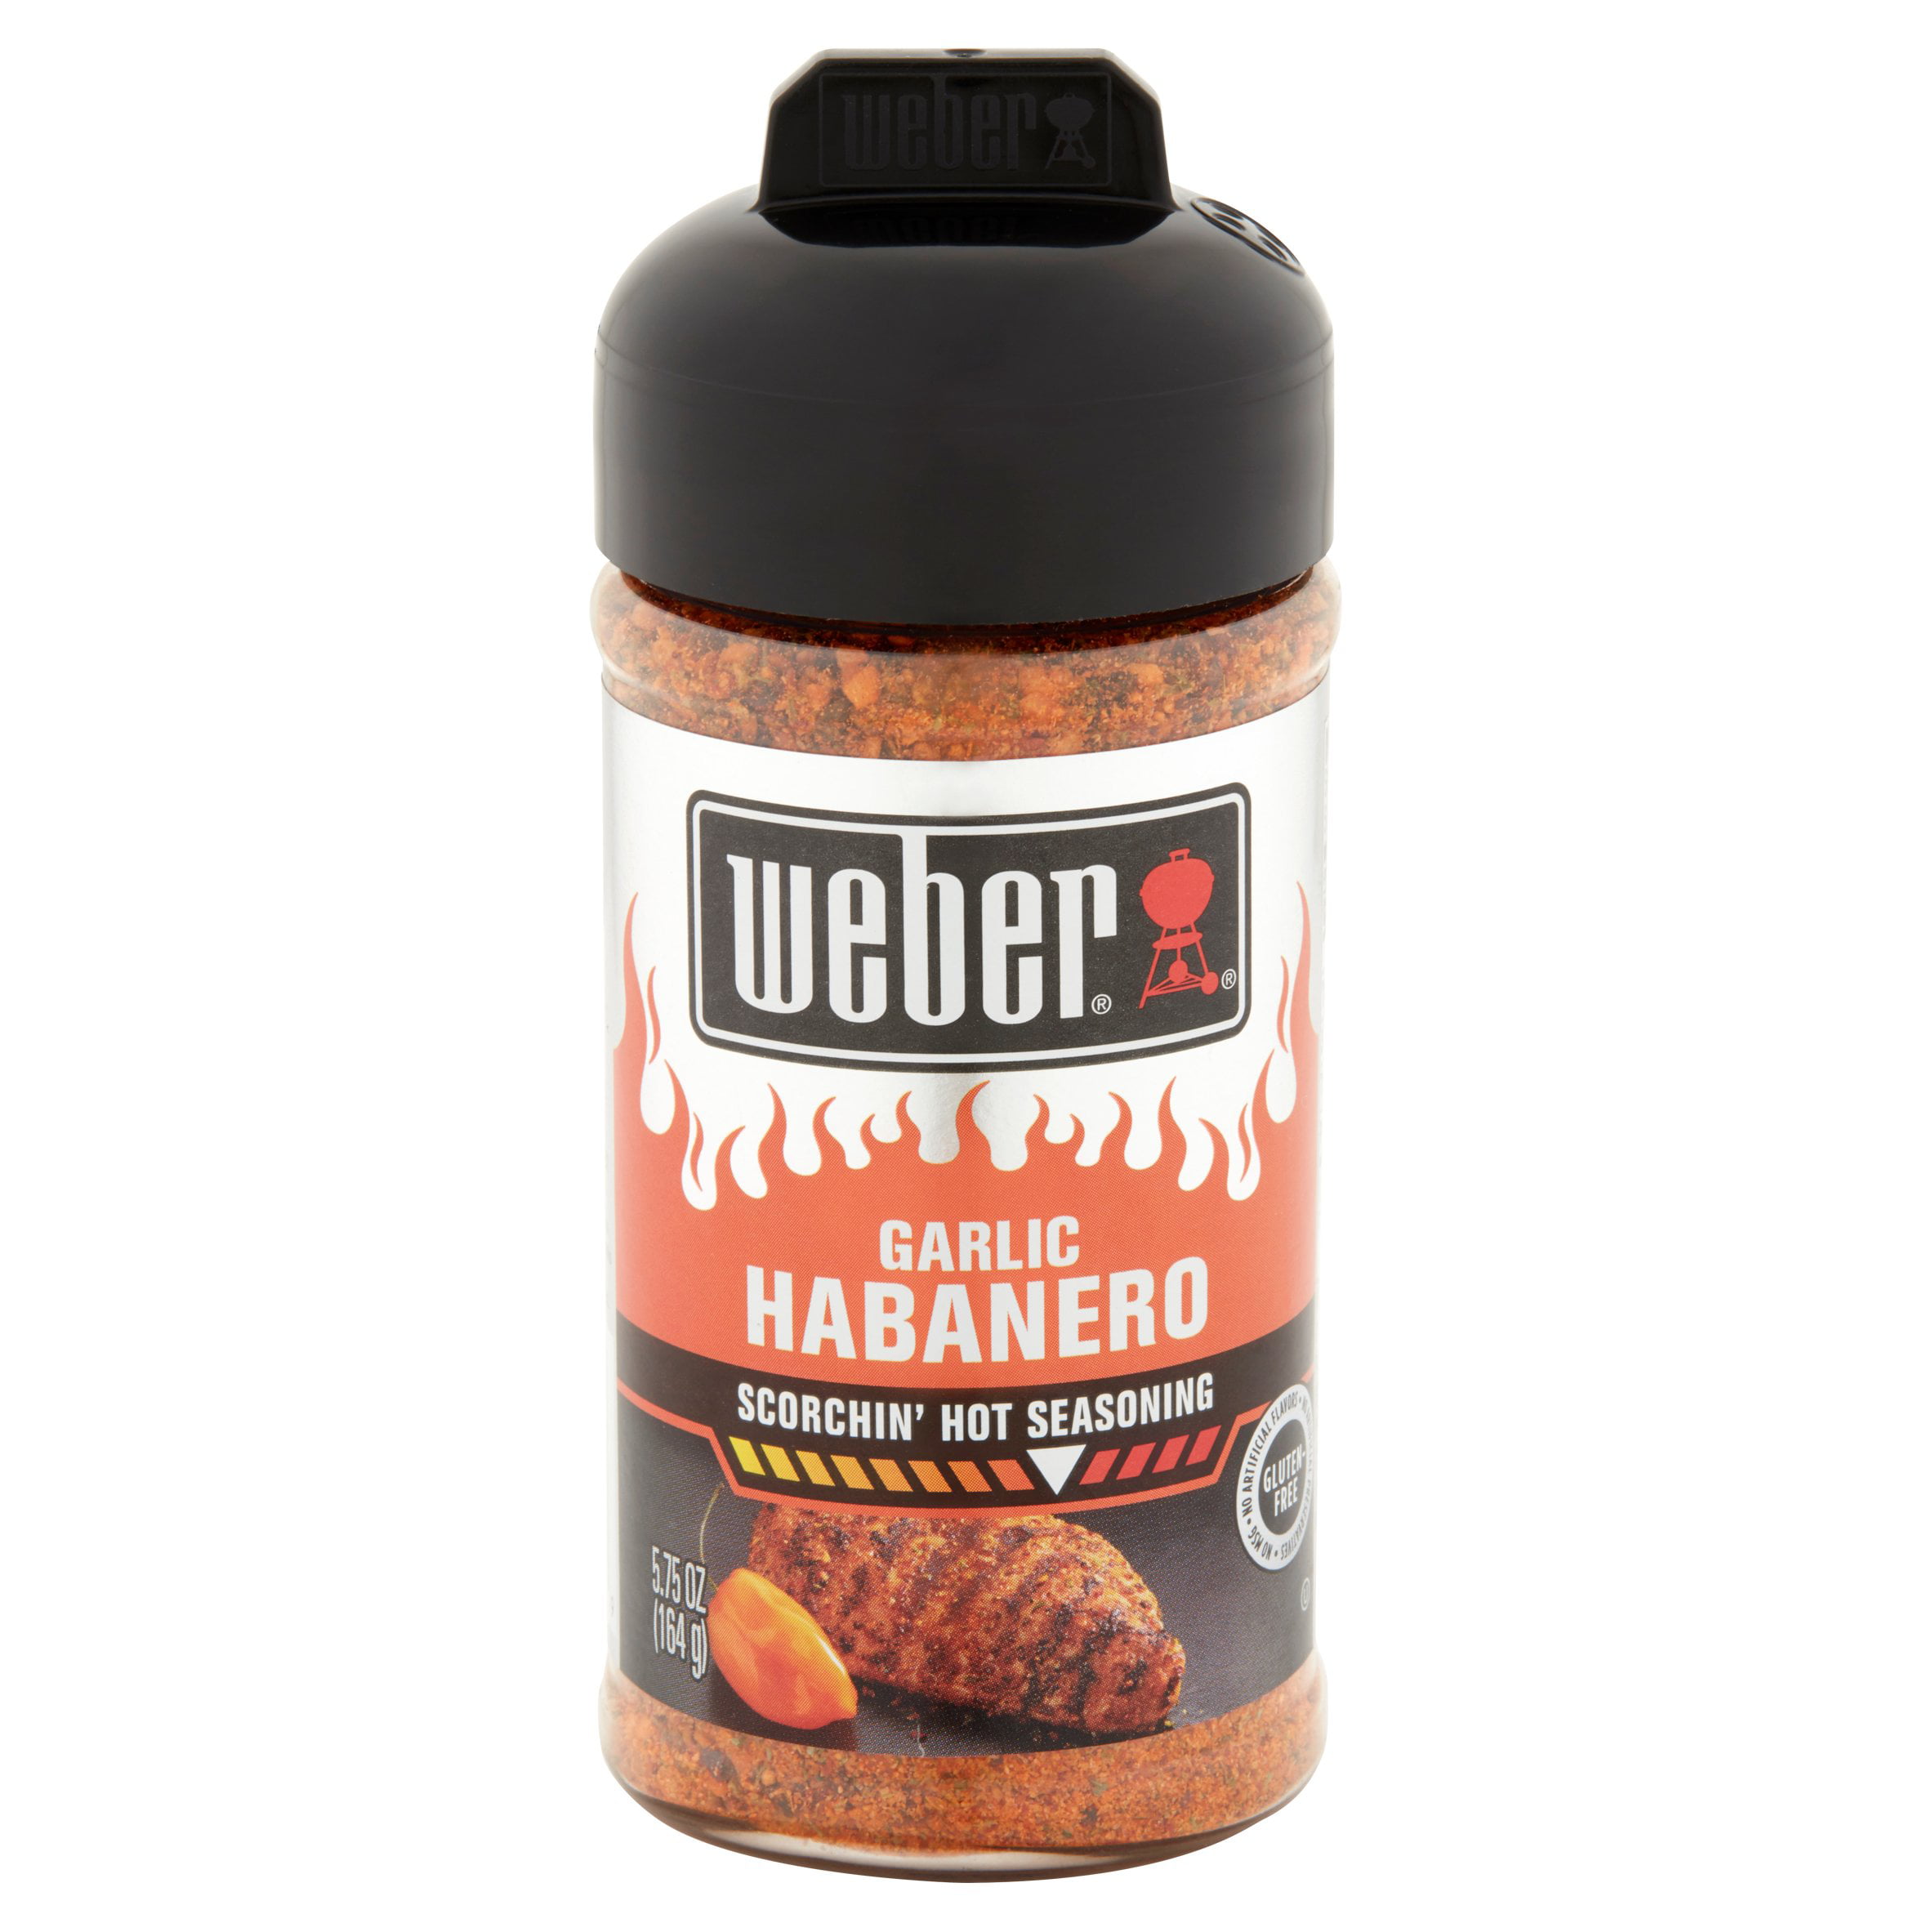 Weber® Garlic Jalapeno Sizzlin' Hot Seasoning 5.75 oz. Shaker